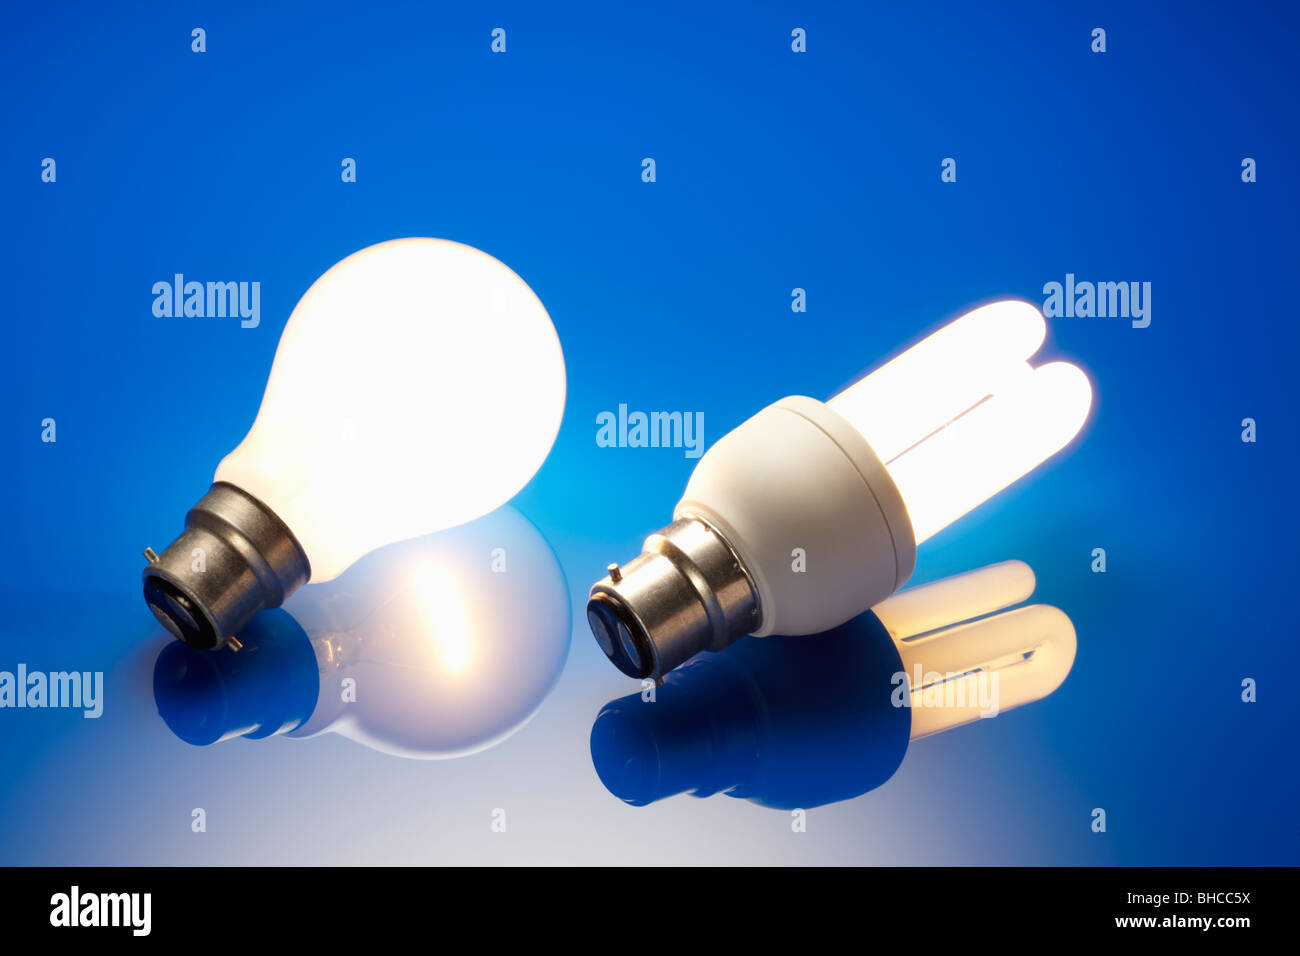 Energy Saving Light Bulb and Standard Light Bulb Illuminated Stock Photo